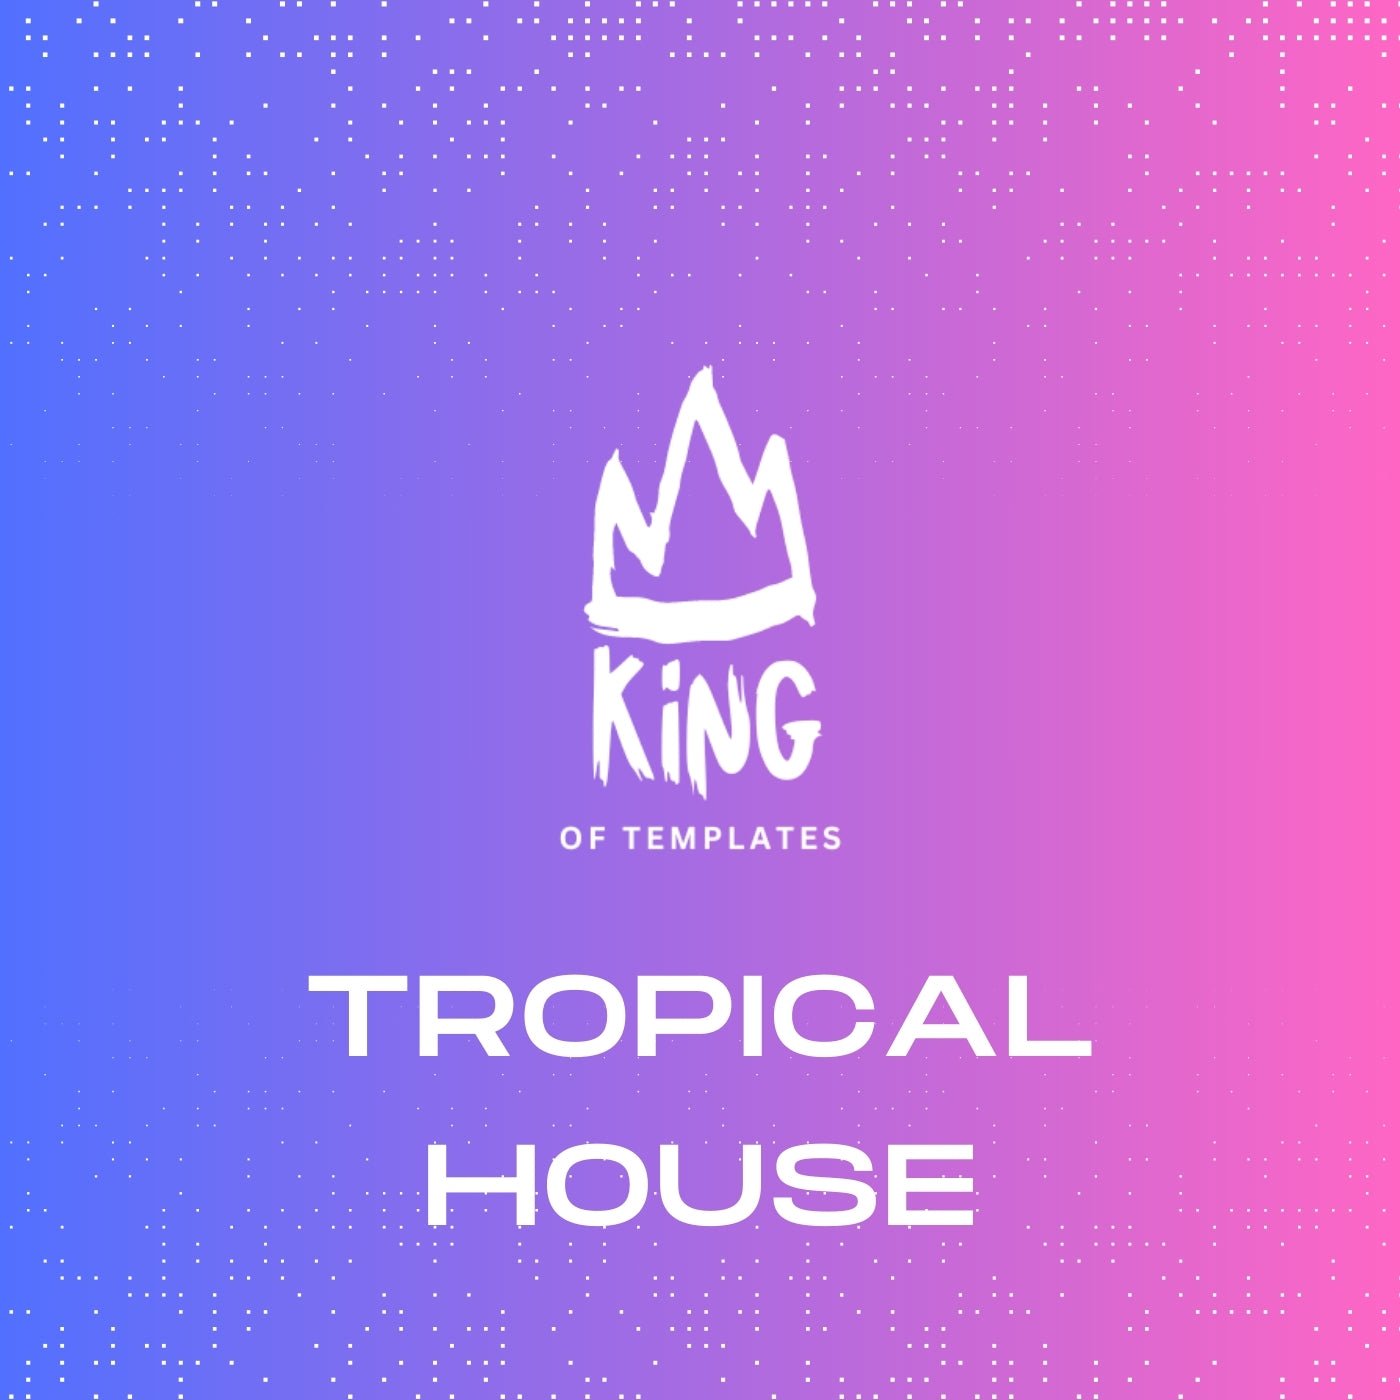 POP TROPICAL HOUSE - King of Templates - Tunebat Marketplace